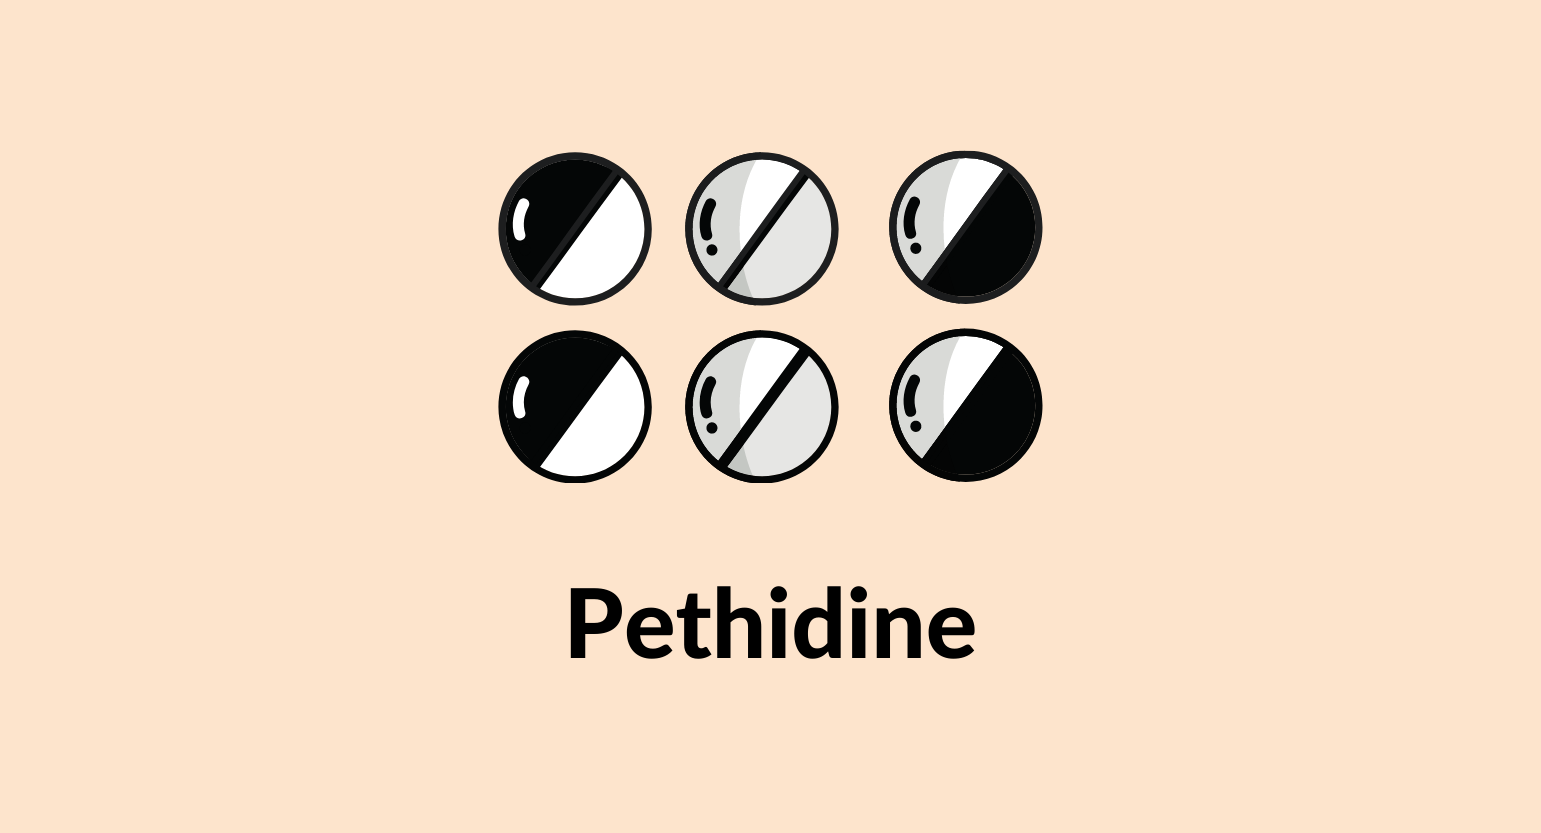 Illustration of pethidine tablets